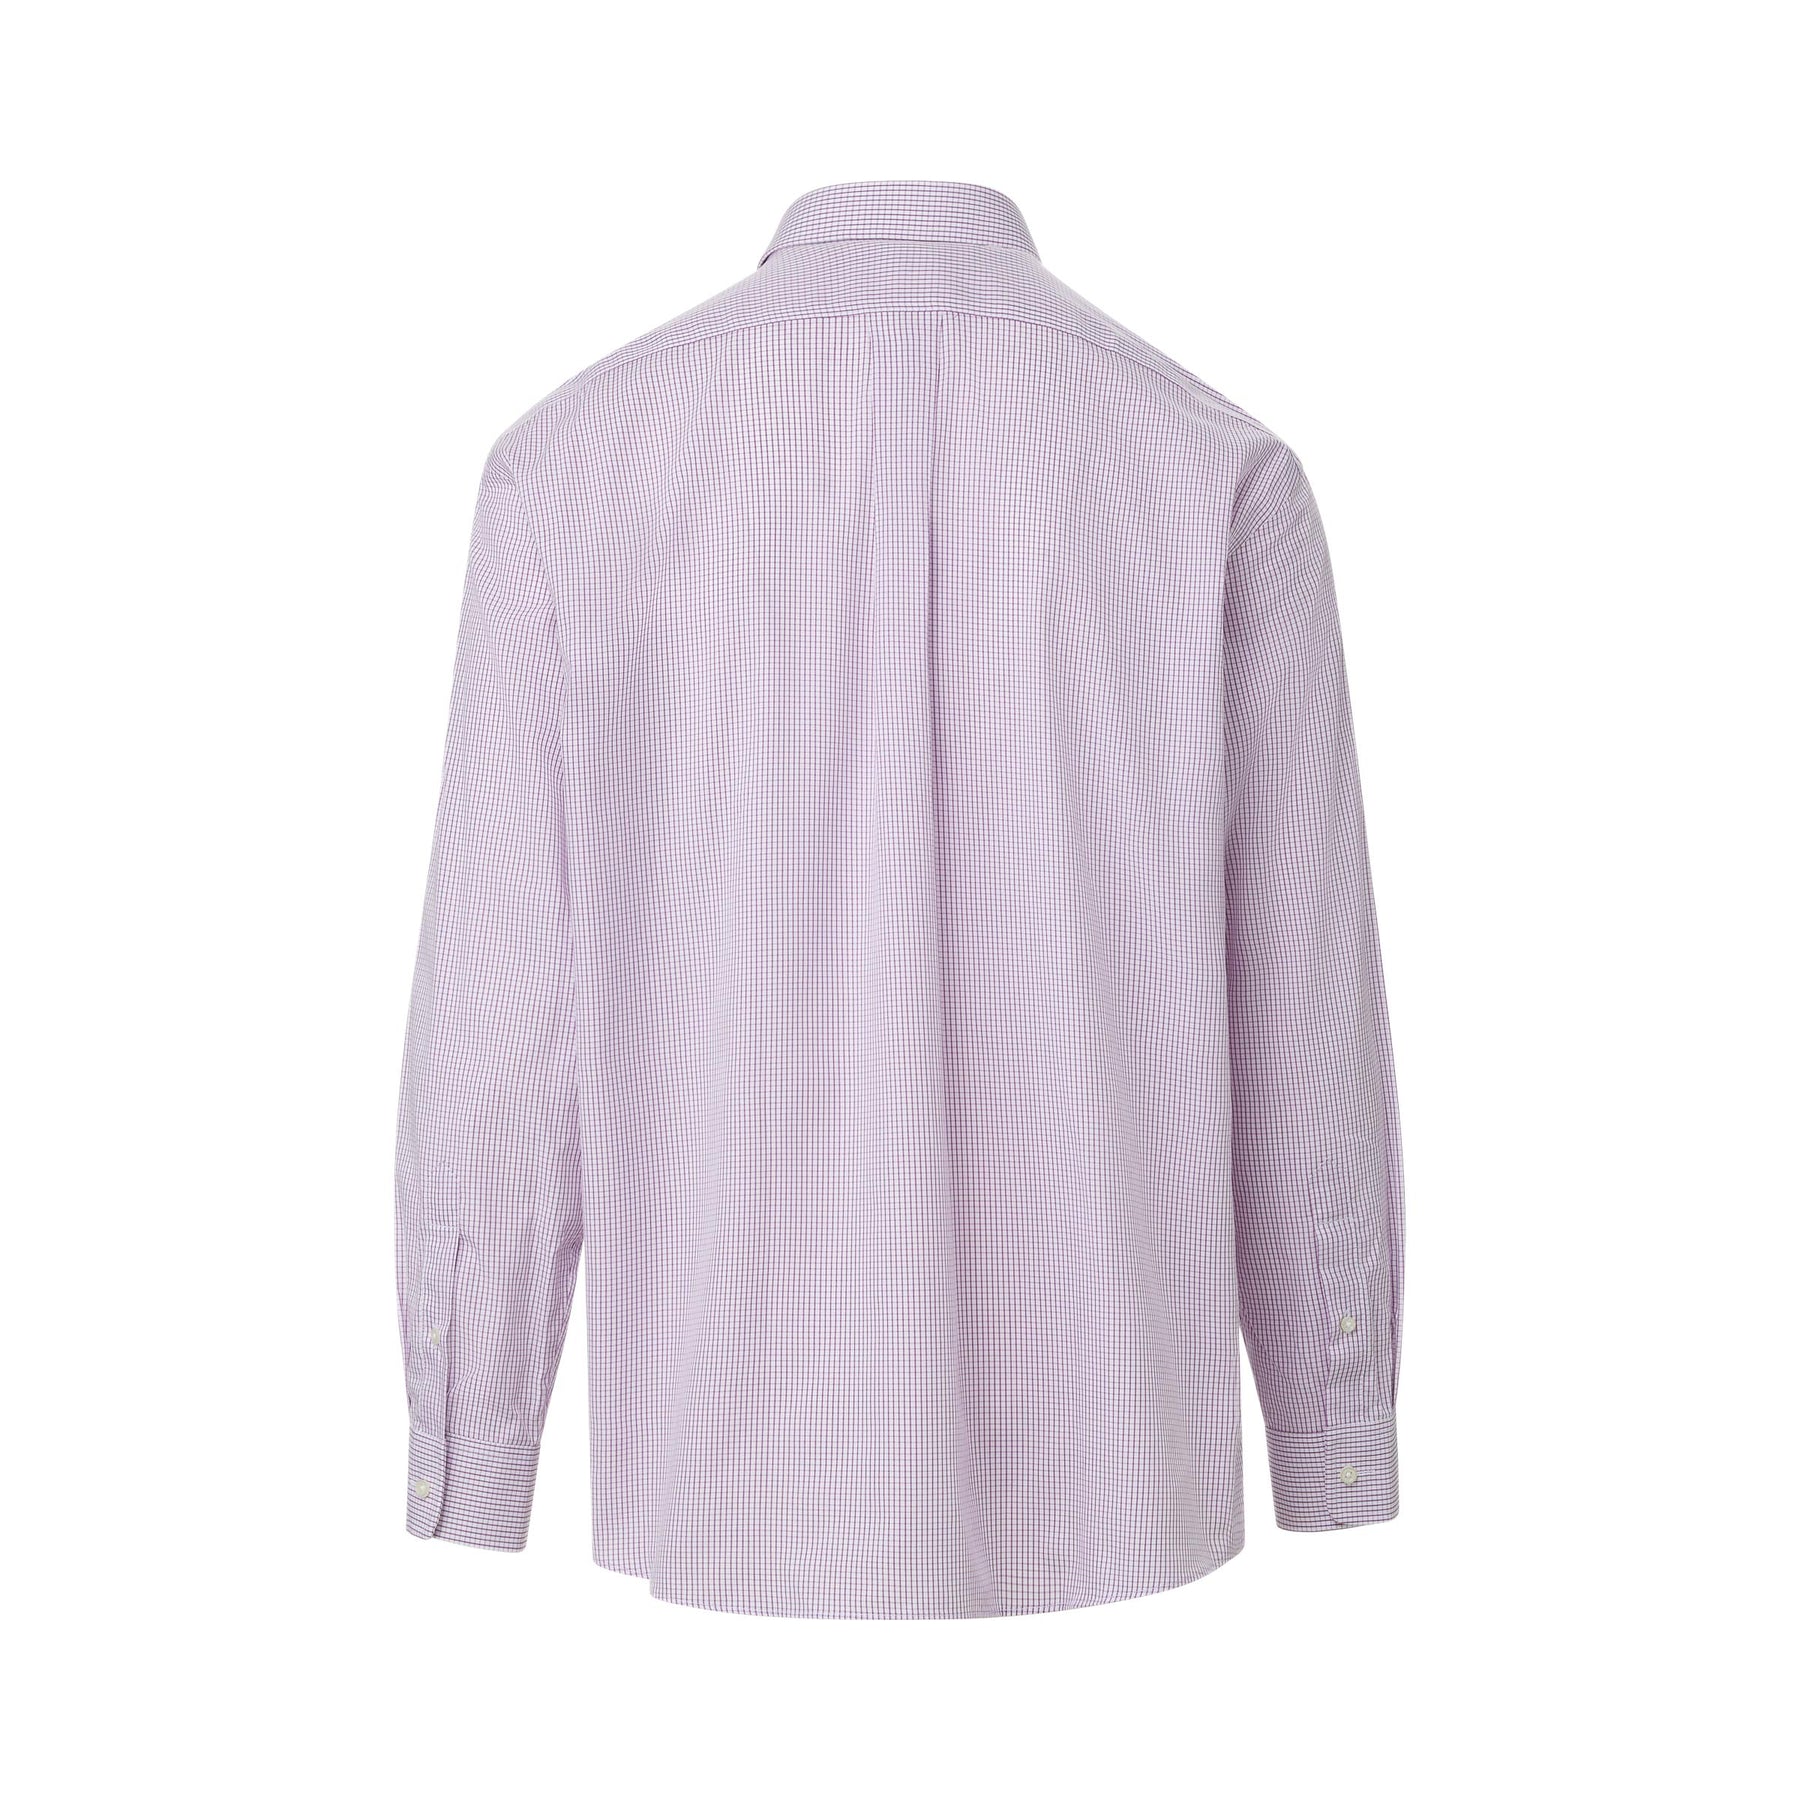 Burgundy Micro Check Long Sleeve ‘Ryan’ Dress Shirt with Magnetic Closures